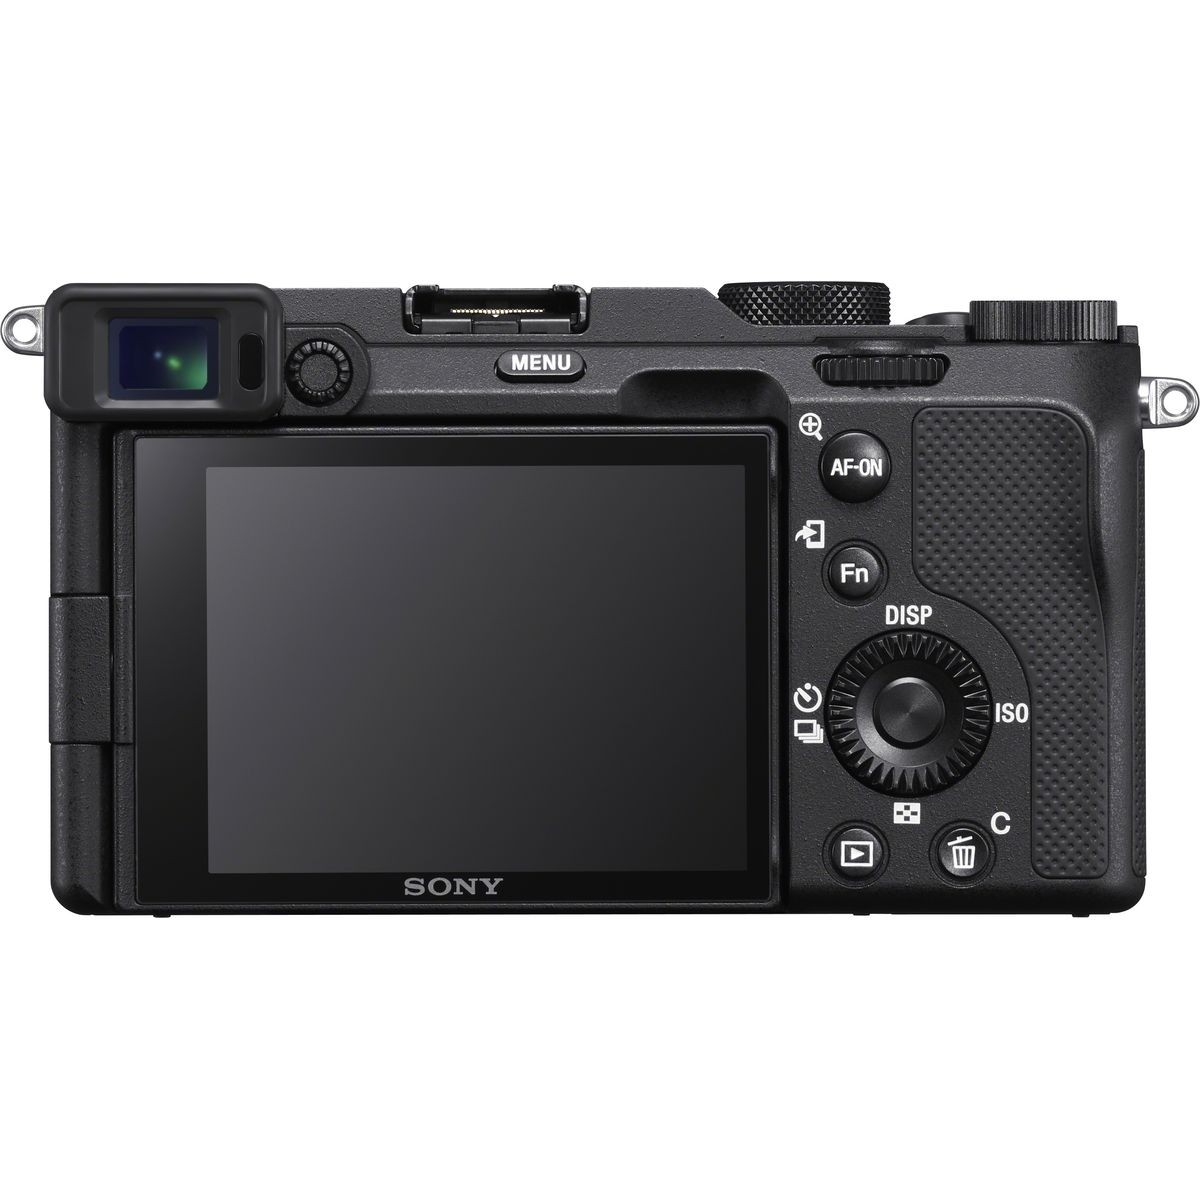 Sony A7C Black + SEL 28-60mm F4-5.6 